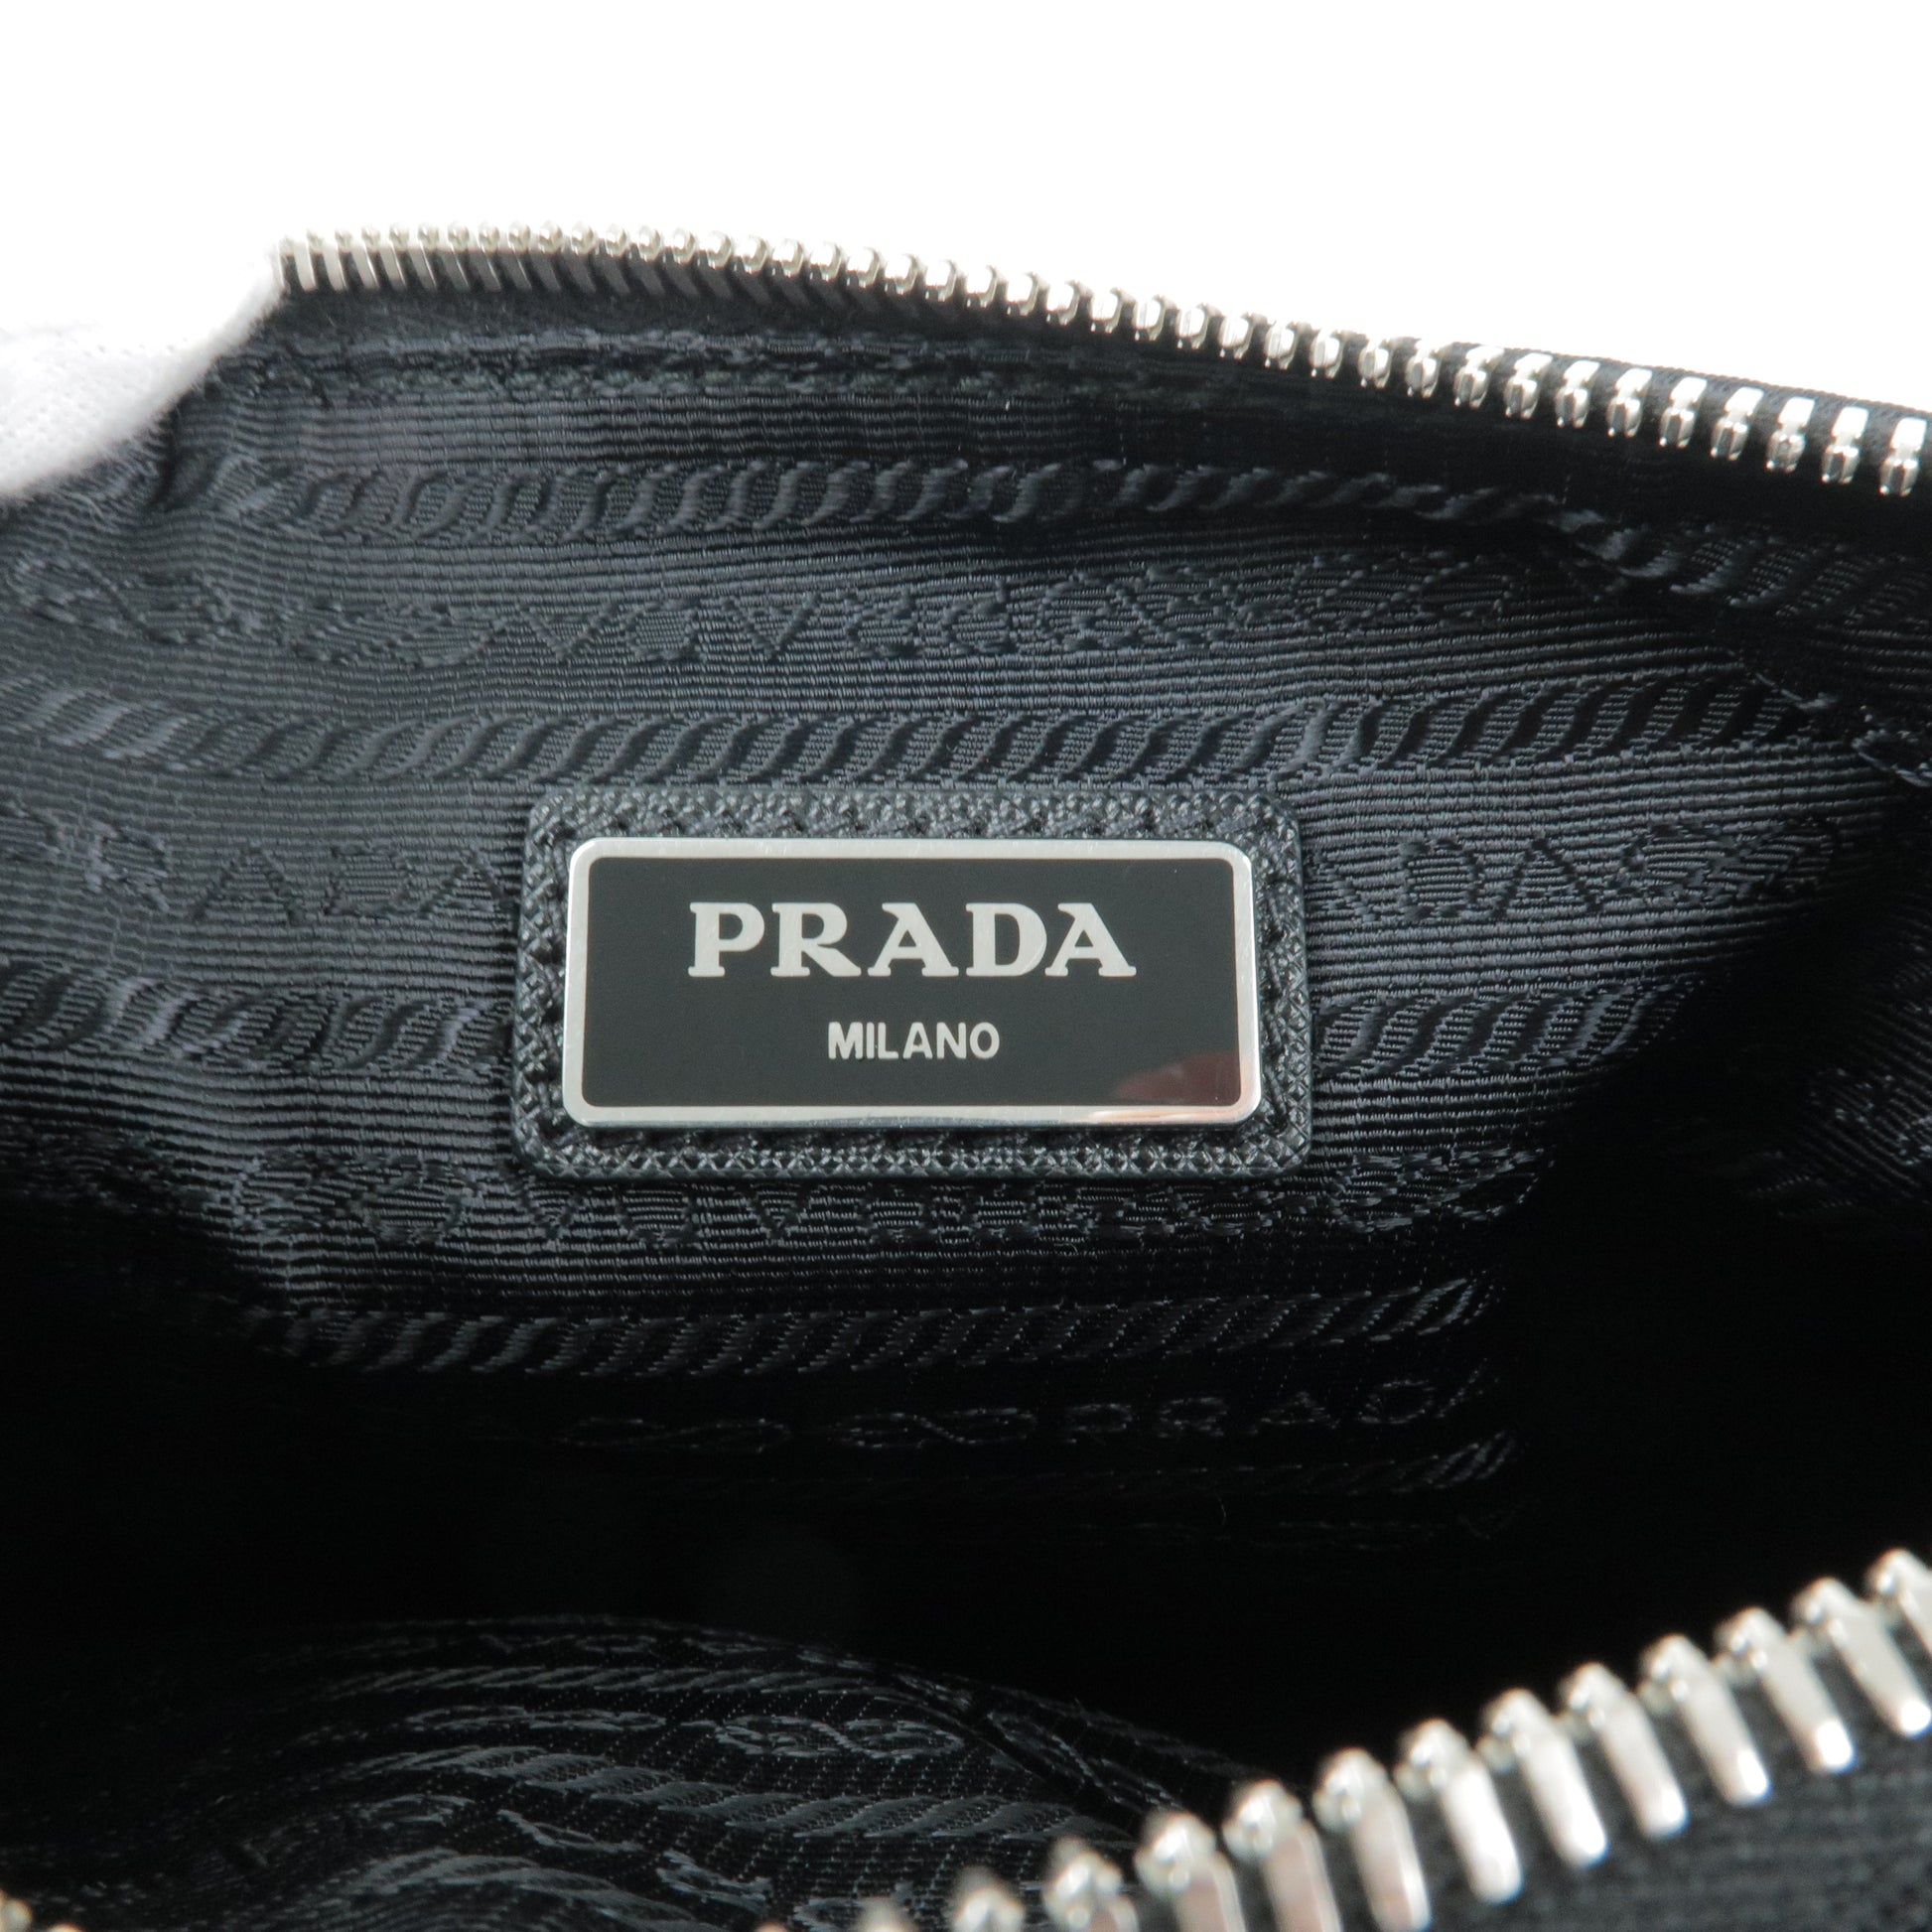 Authentic PRADA Nylon and Leather Crossbody Shoulder Bag yellow